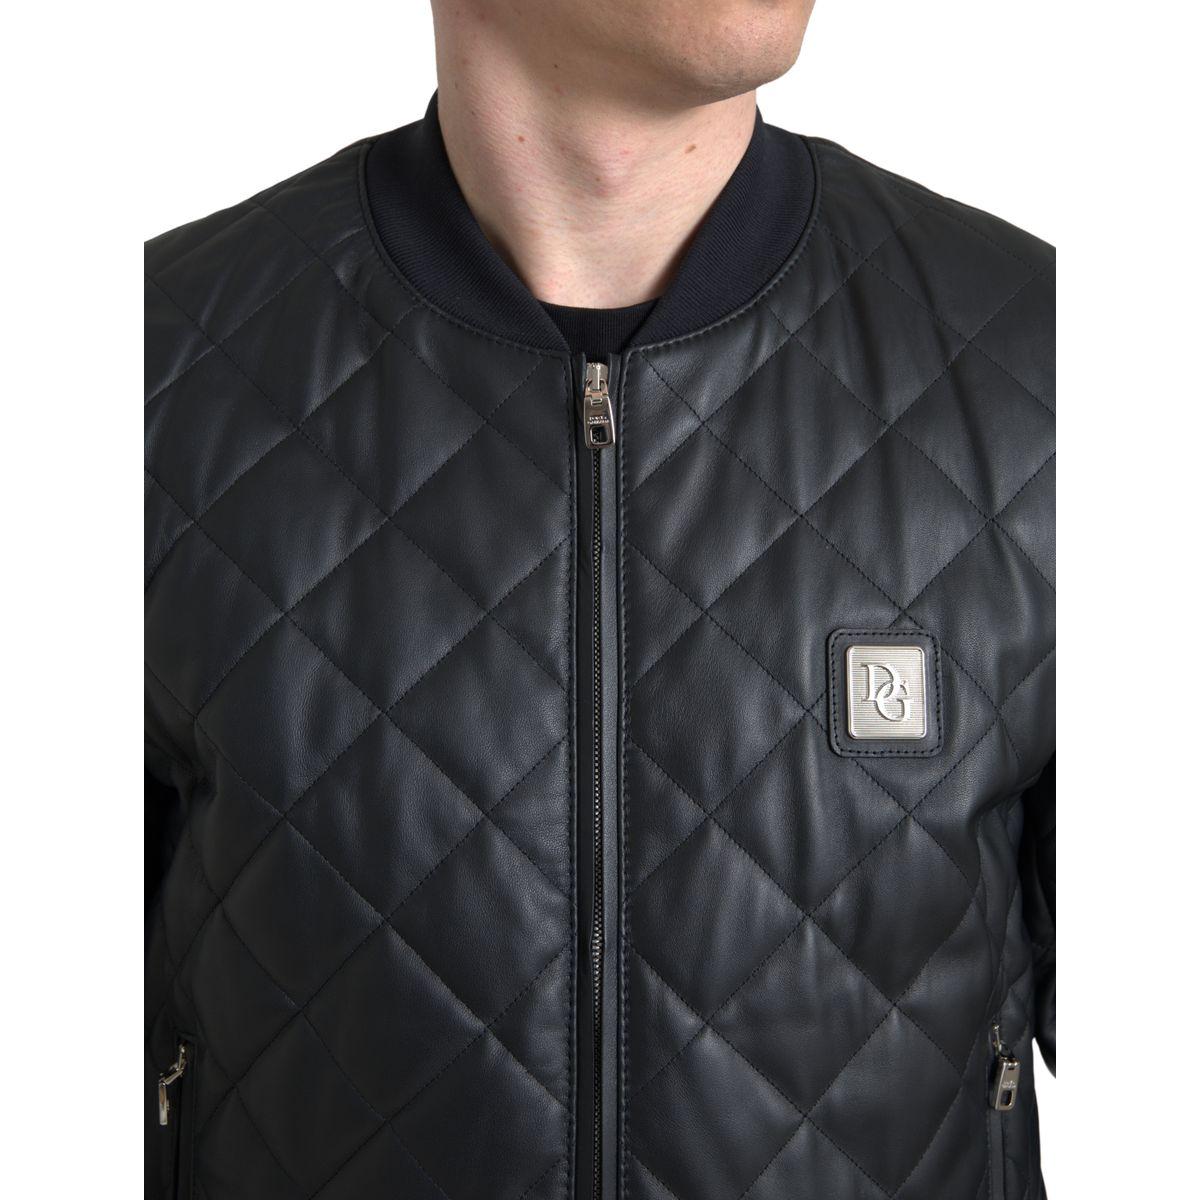 Dolce & Gabbana Elegant Black Leather Bomber Jacket black-leather-full-zip-quilted-jacket